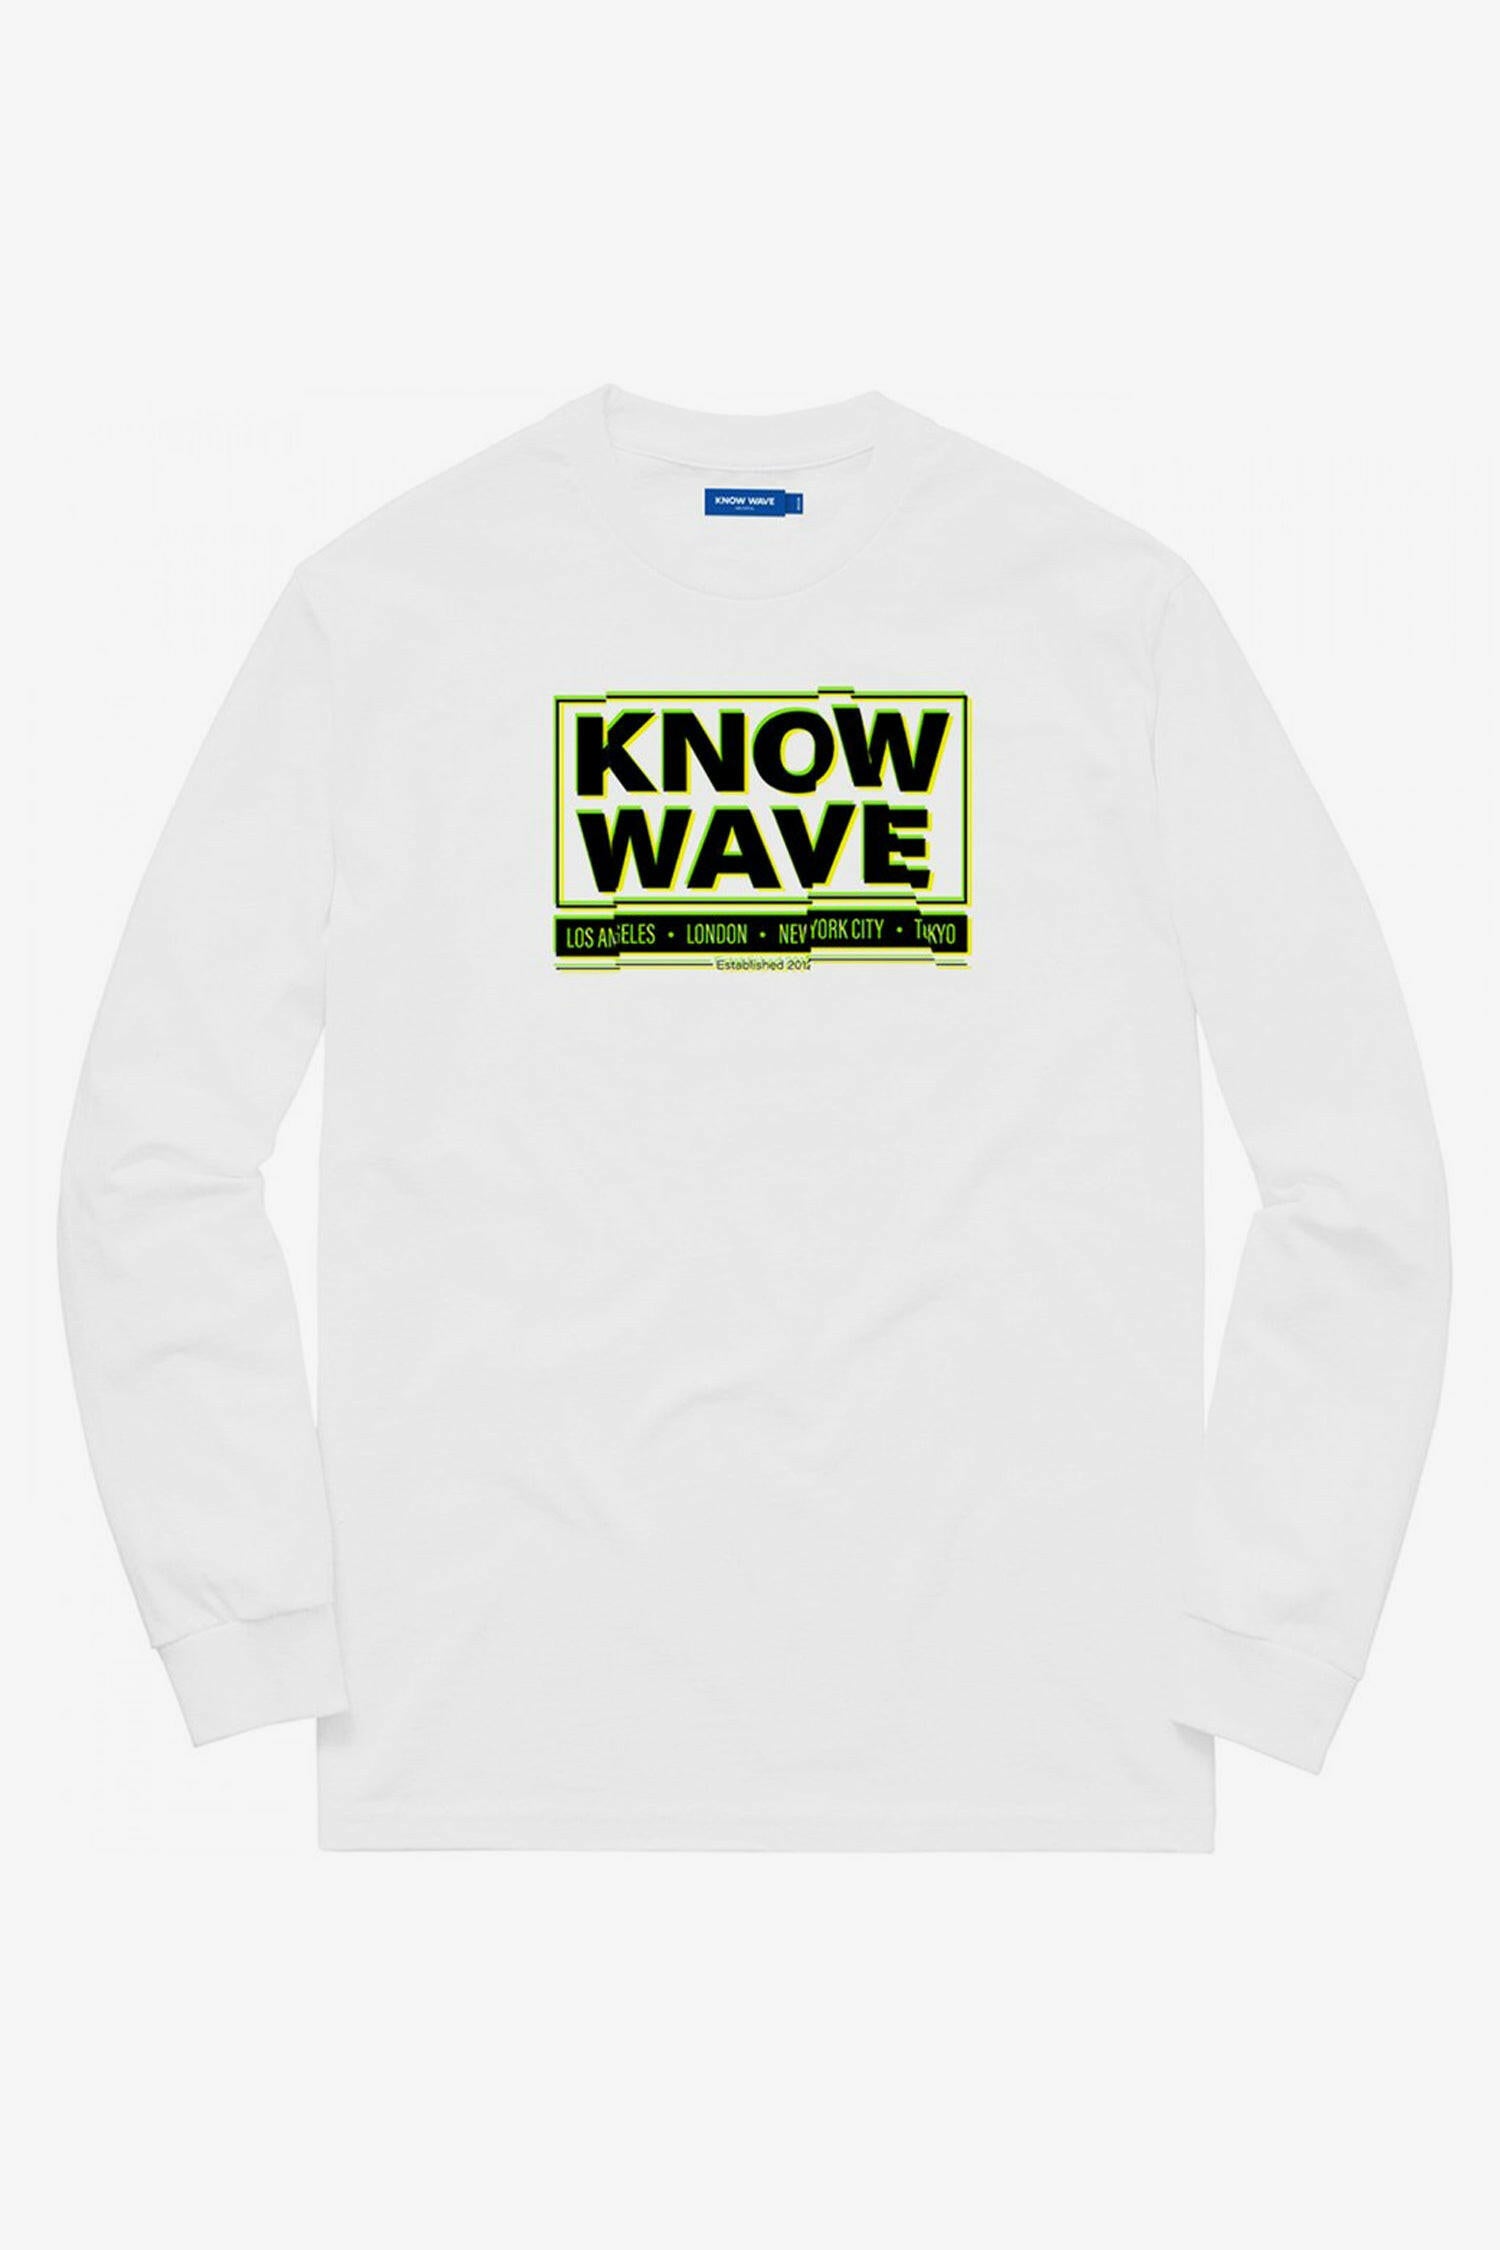 Selectshop FRAME - KNOW WAVE Chop It Up Longsleeve T-Shirt Dubai